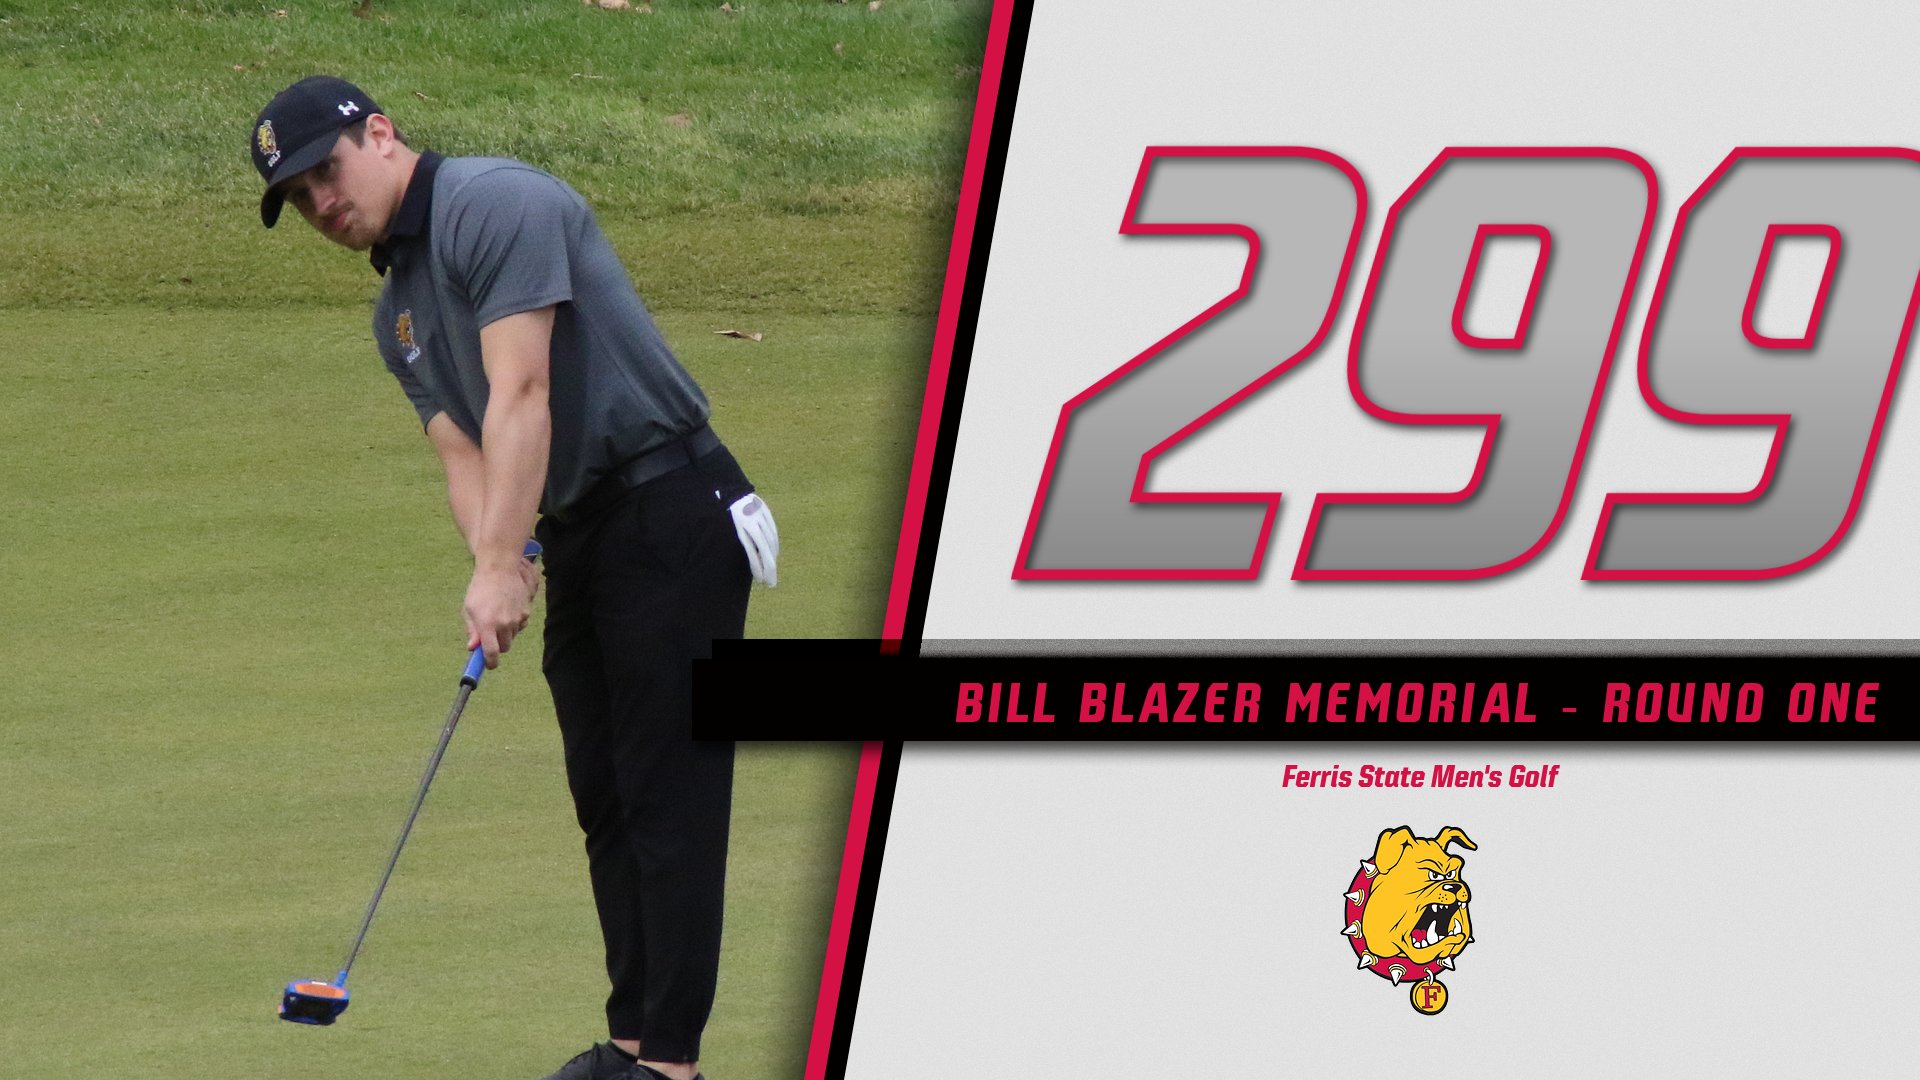 Bulldog Men's Golf Third Overall After Round One At Bill Blazer Memorial